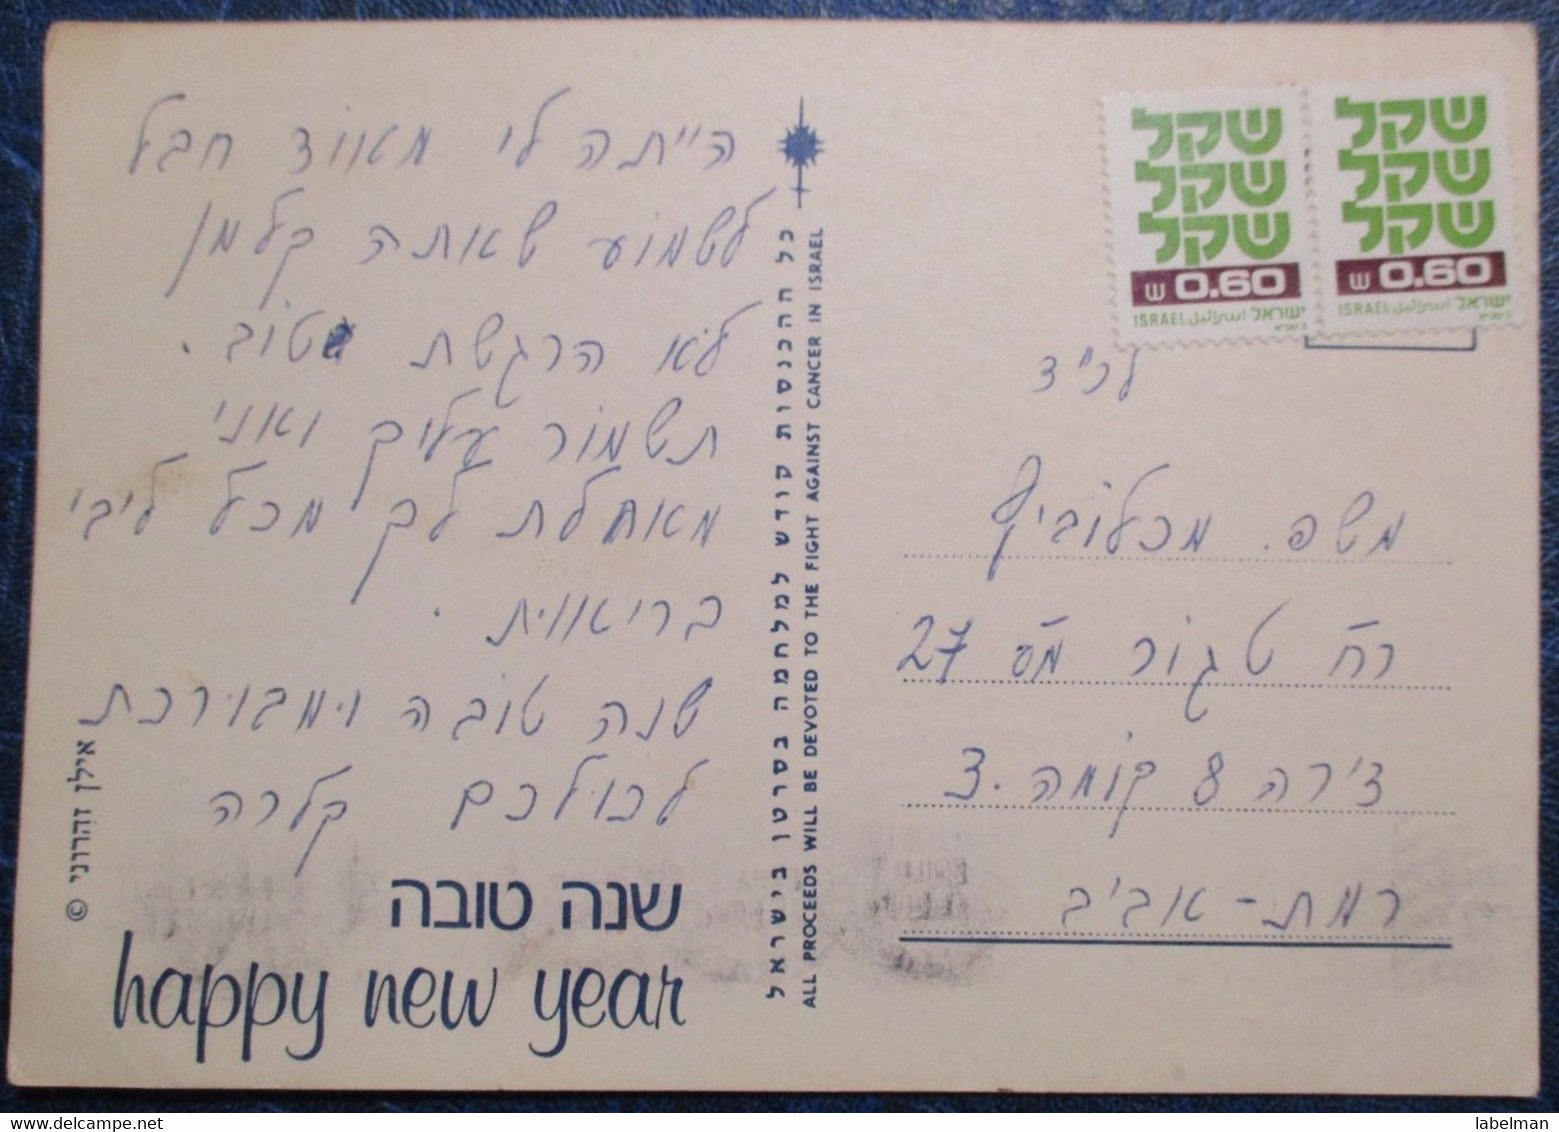 ISRAEL FIGHT CANCER ASSOCIATION SHANA TOVA NEW YEAR JUDAICA PC ILAN ZAARONI GILAD CARD POSTCARD CARTOLINA ANSICHTSKARTE - Neujahr